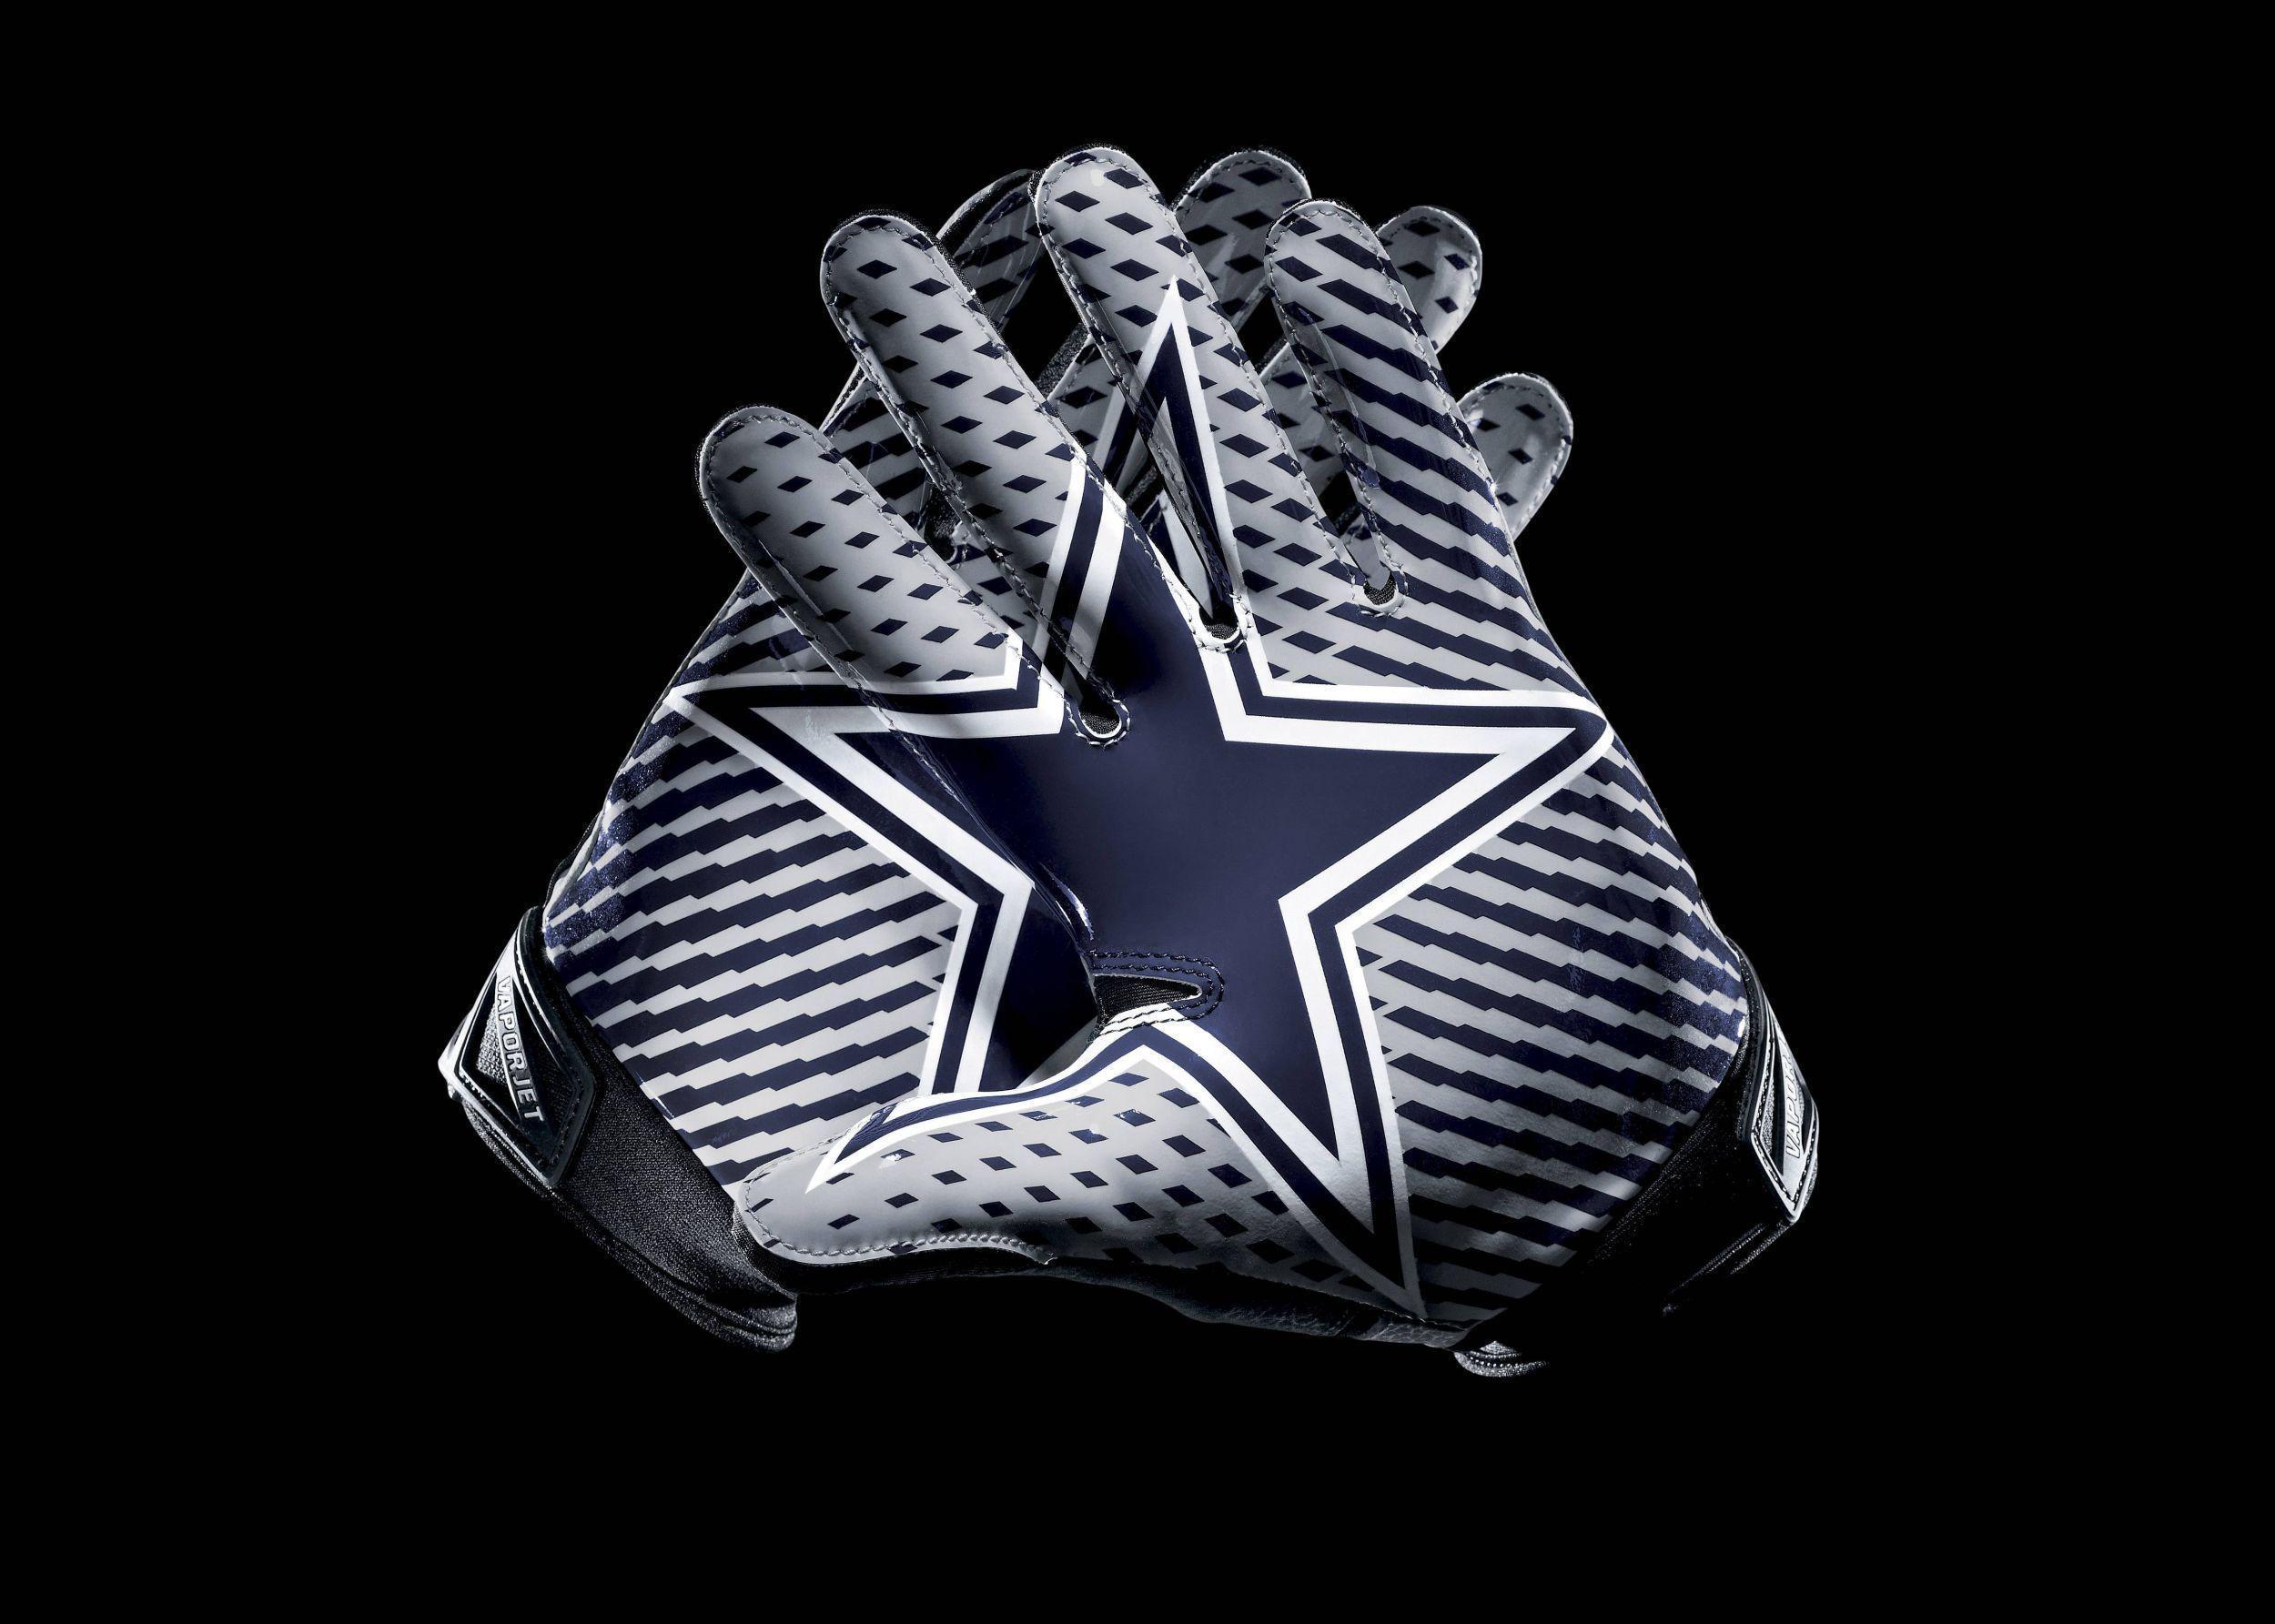 Awesome Dallas Cowboys Image Collection: Dallas Cowboys